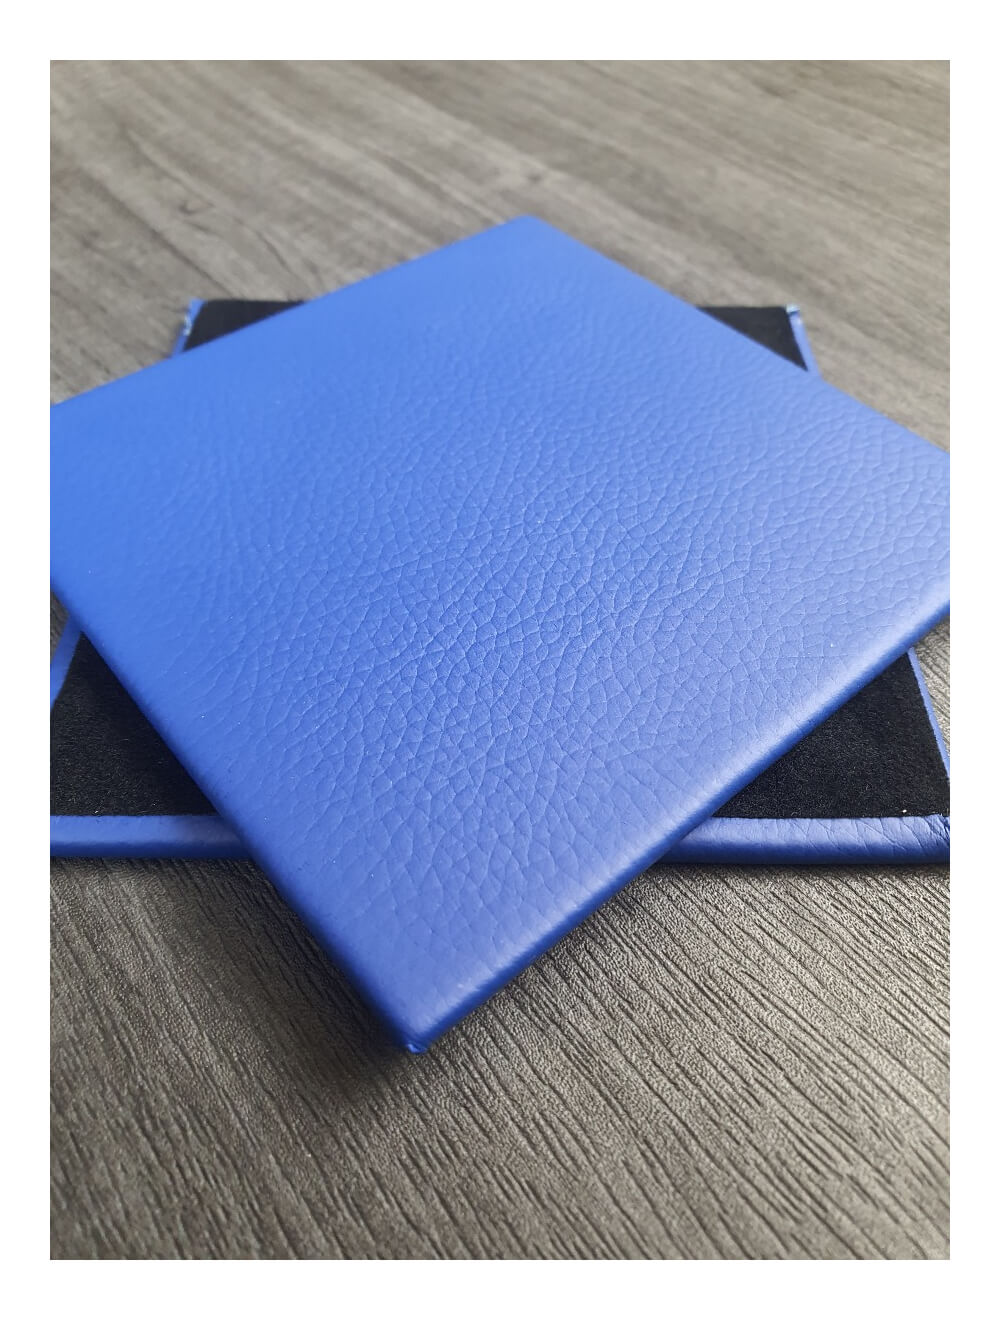 Djup Ultramarine Shelly Leather Coaster- 10cm SQ (Sale Item)